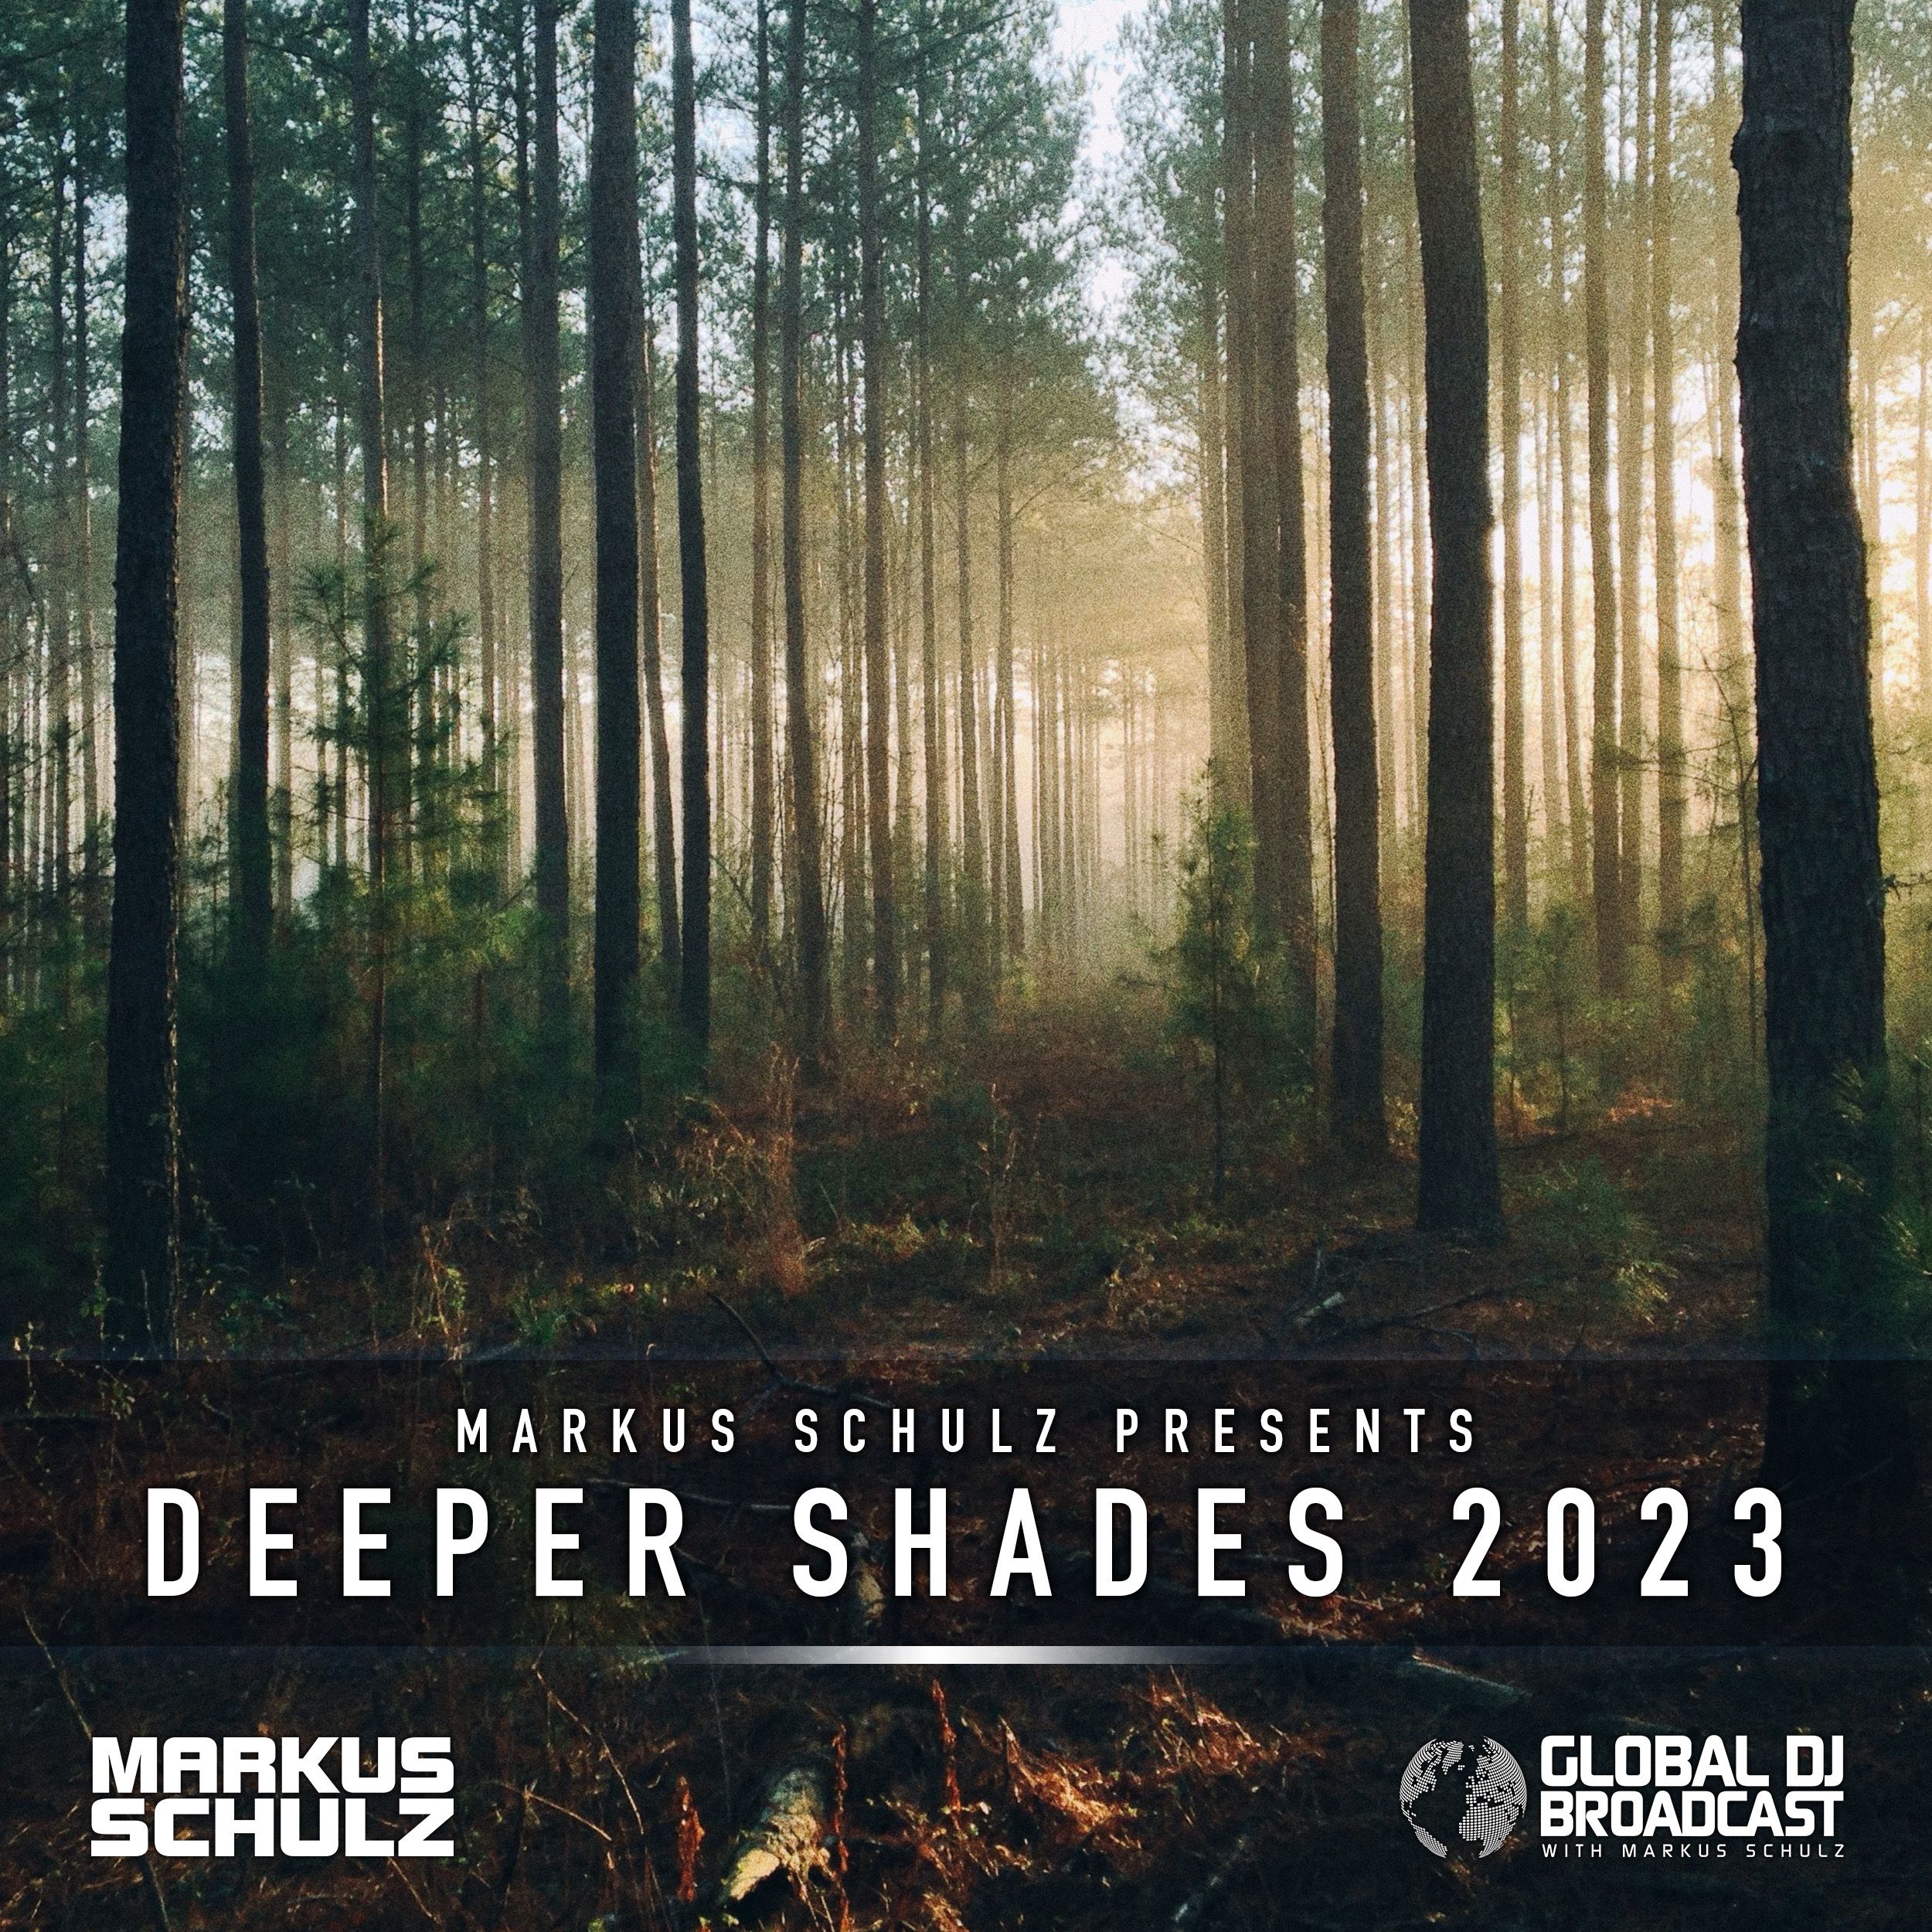 Markus Schulz - Global DJ Broadcast Deeper Shades 2023 (2 Hour Progressive & Organic House Mix)